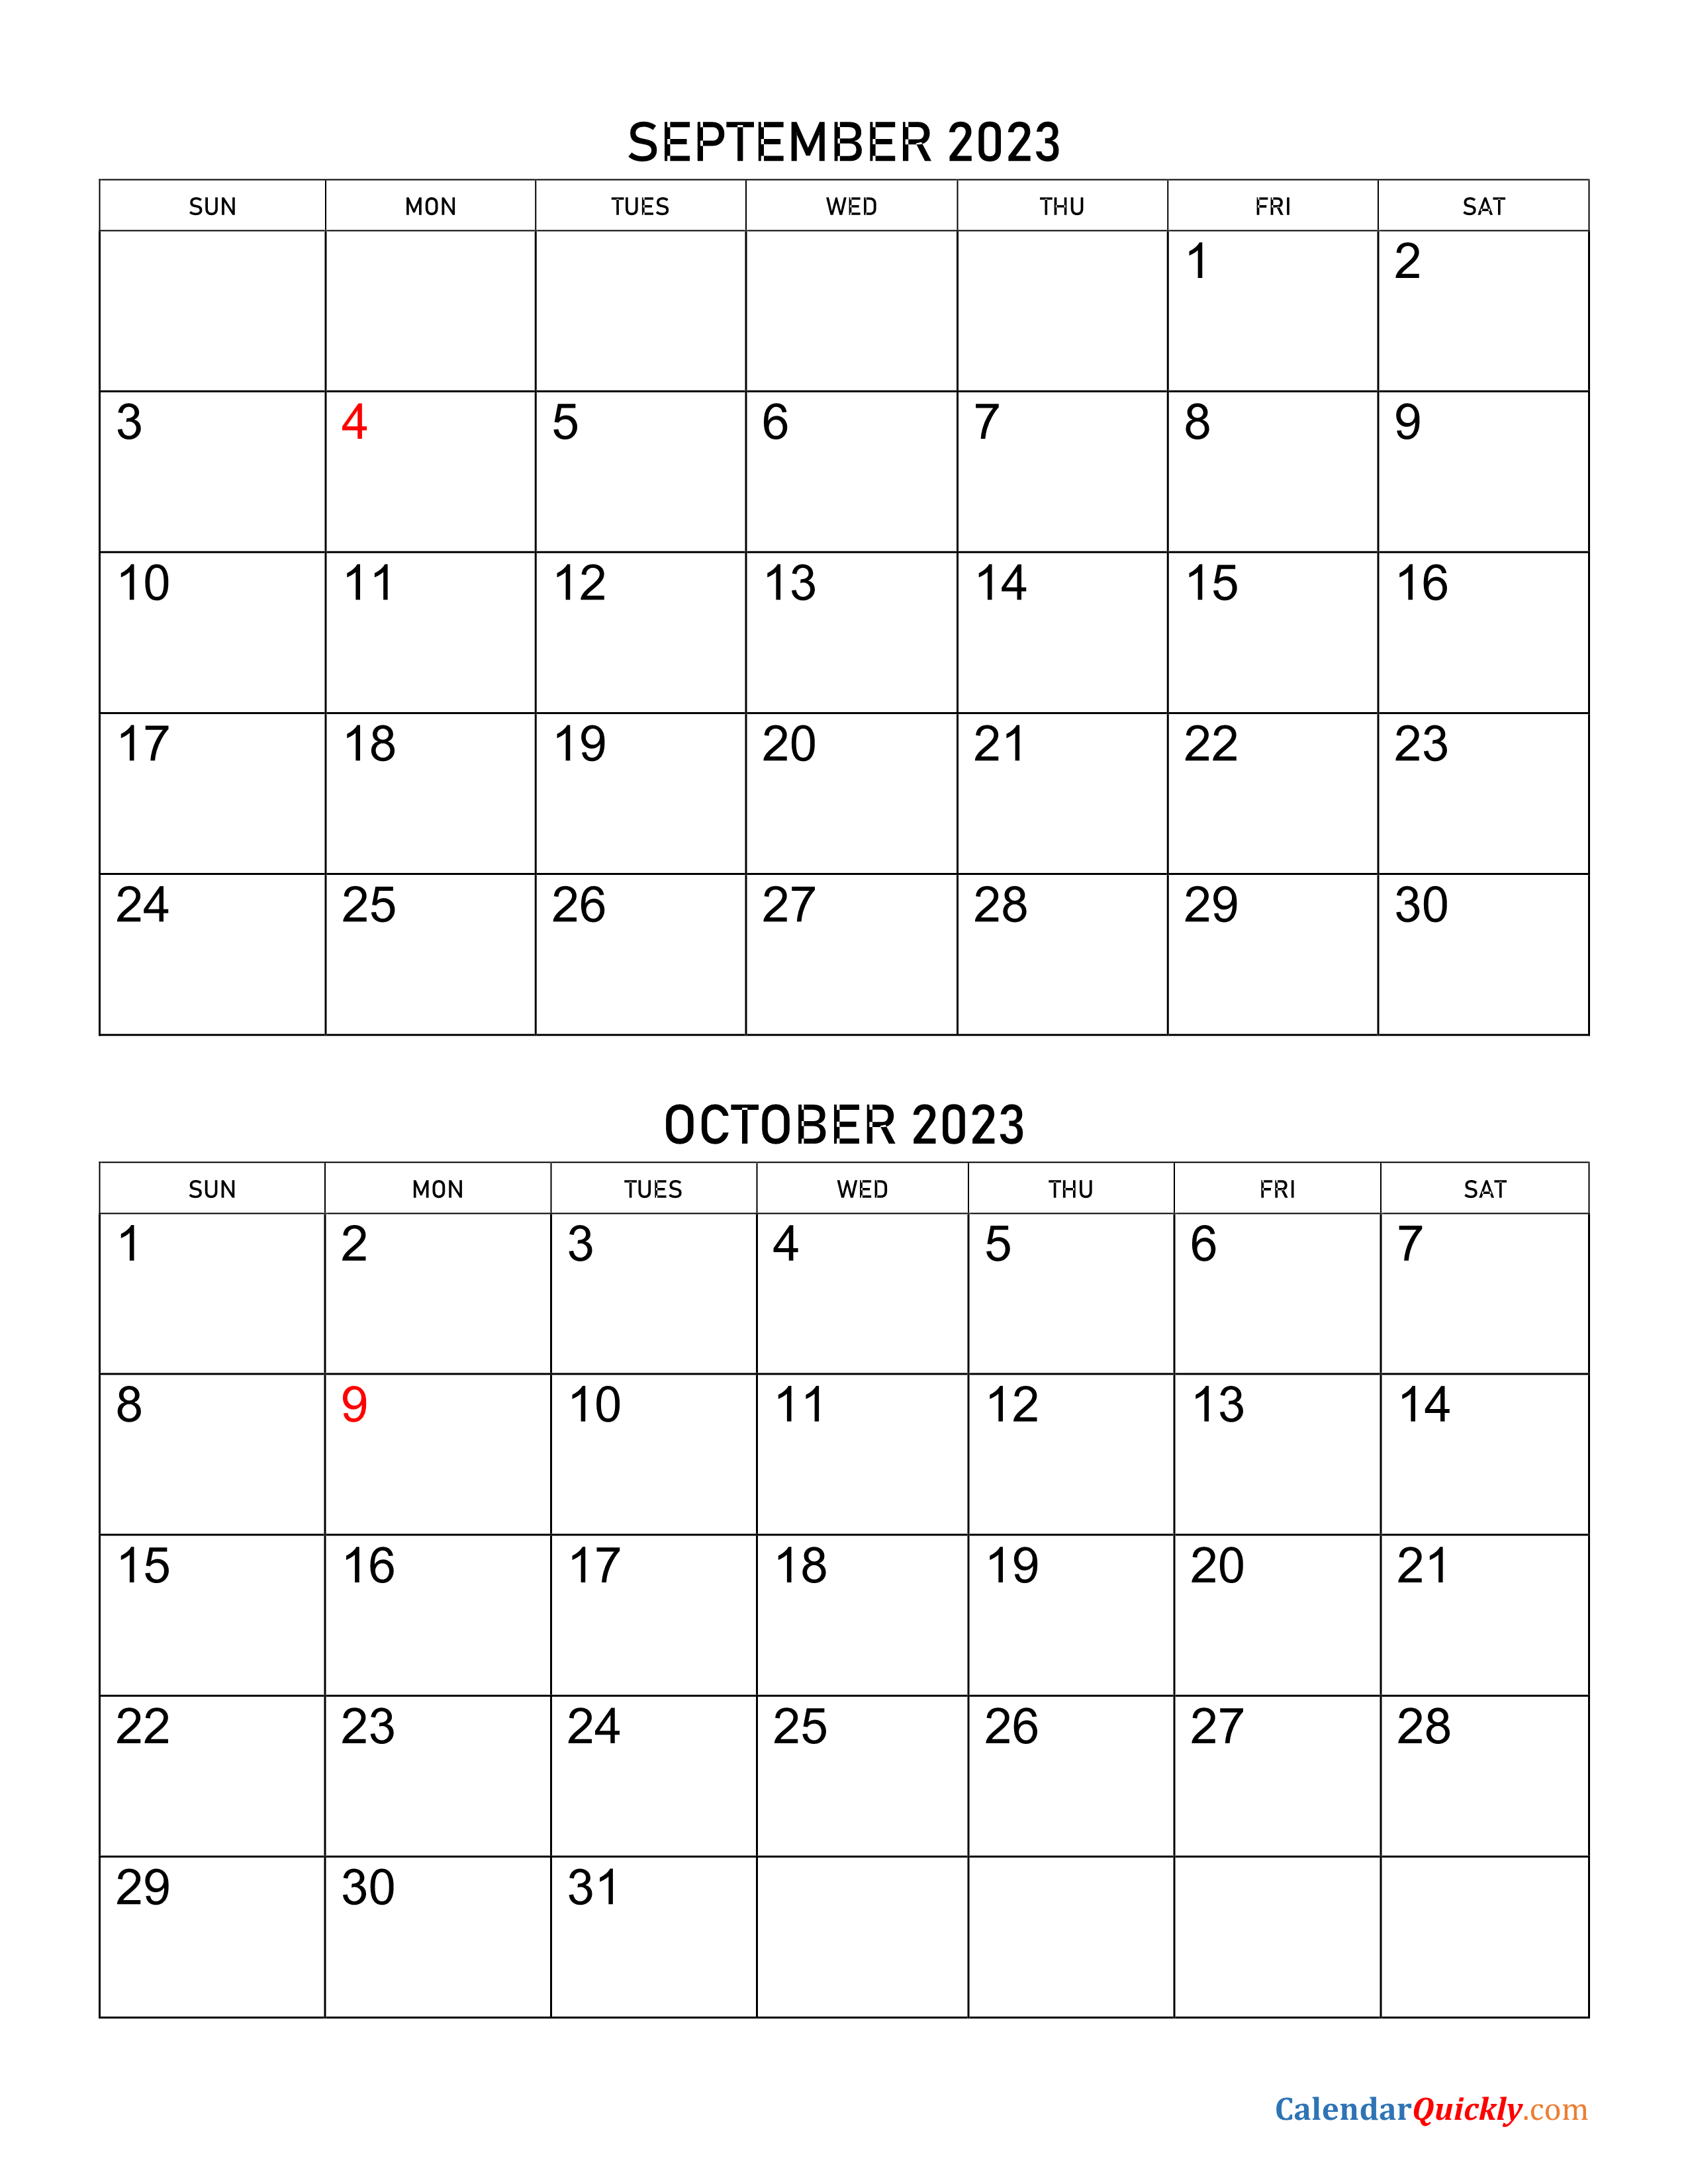 September and October 2023 Calendar Calendar Quickly